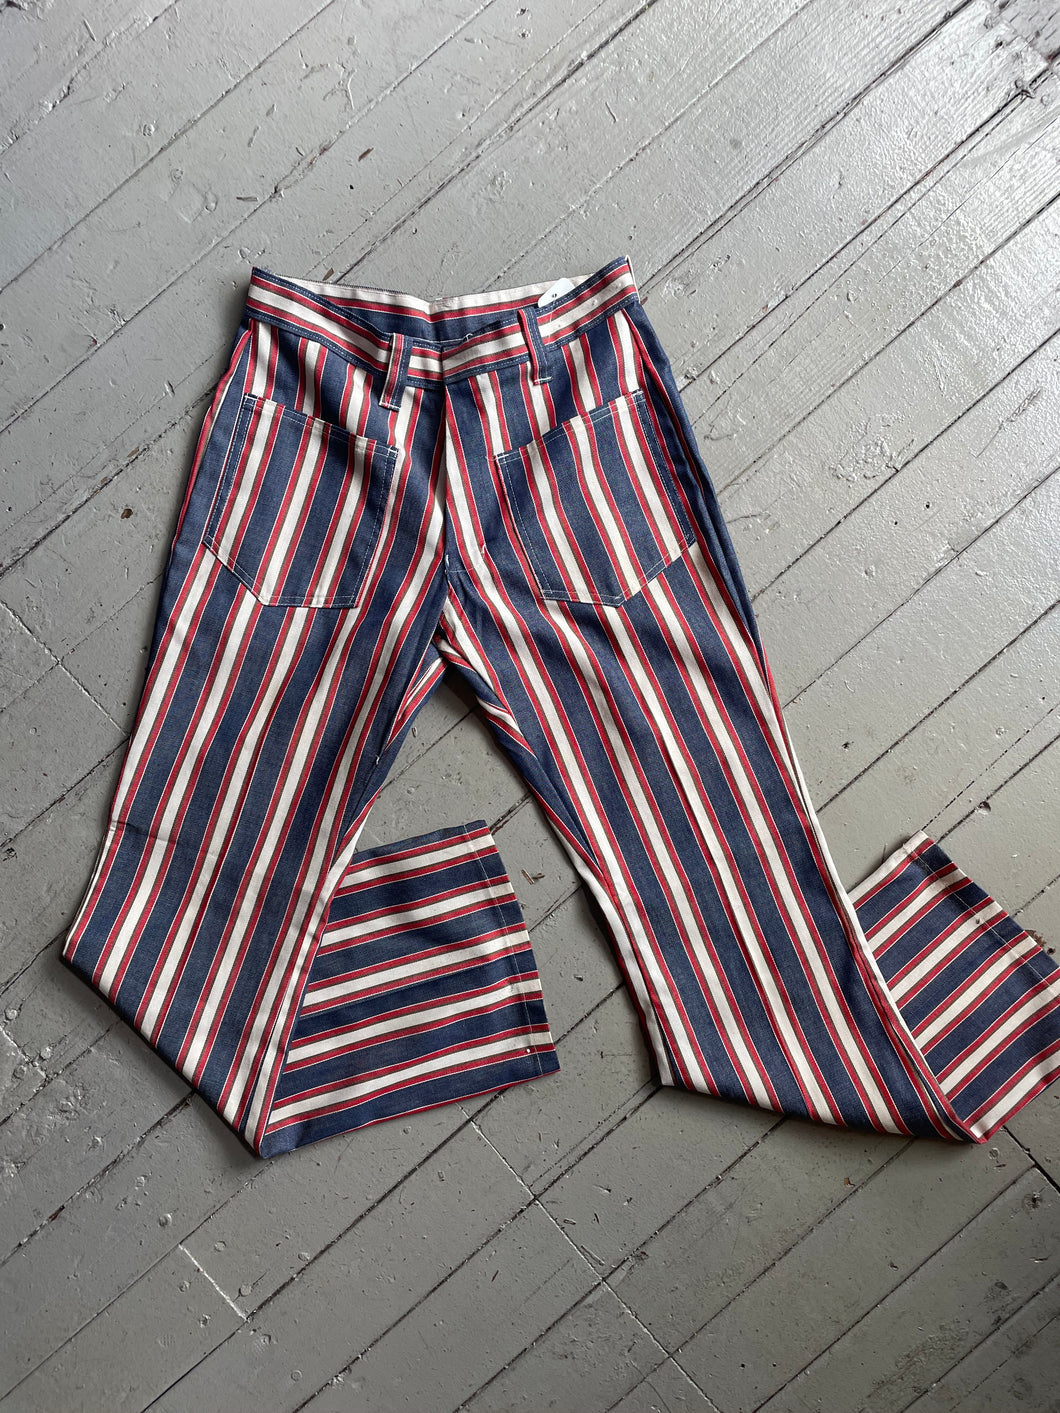 Vintage Women’s Striped Flare Pants